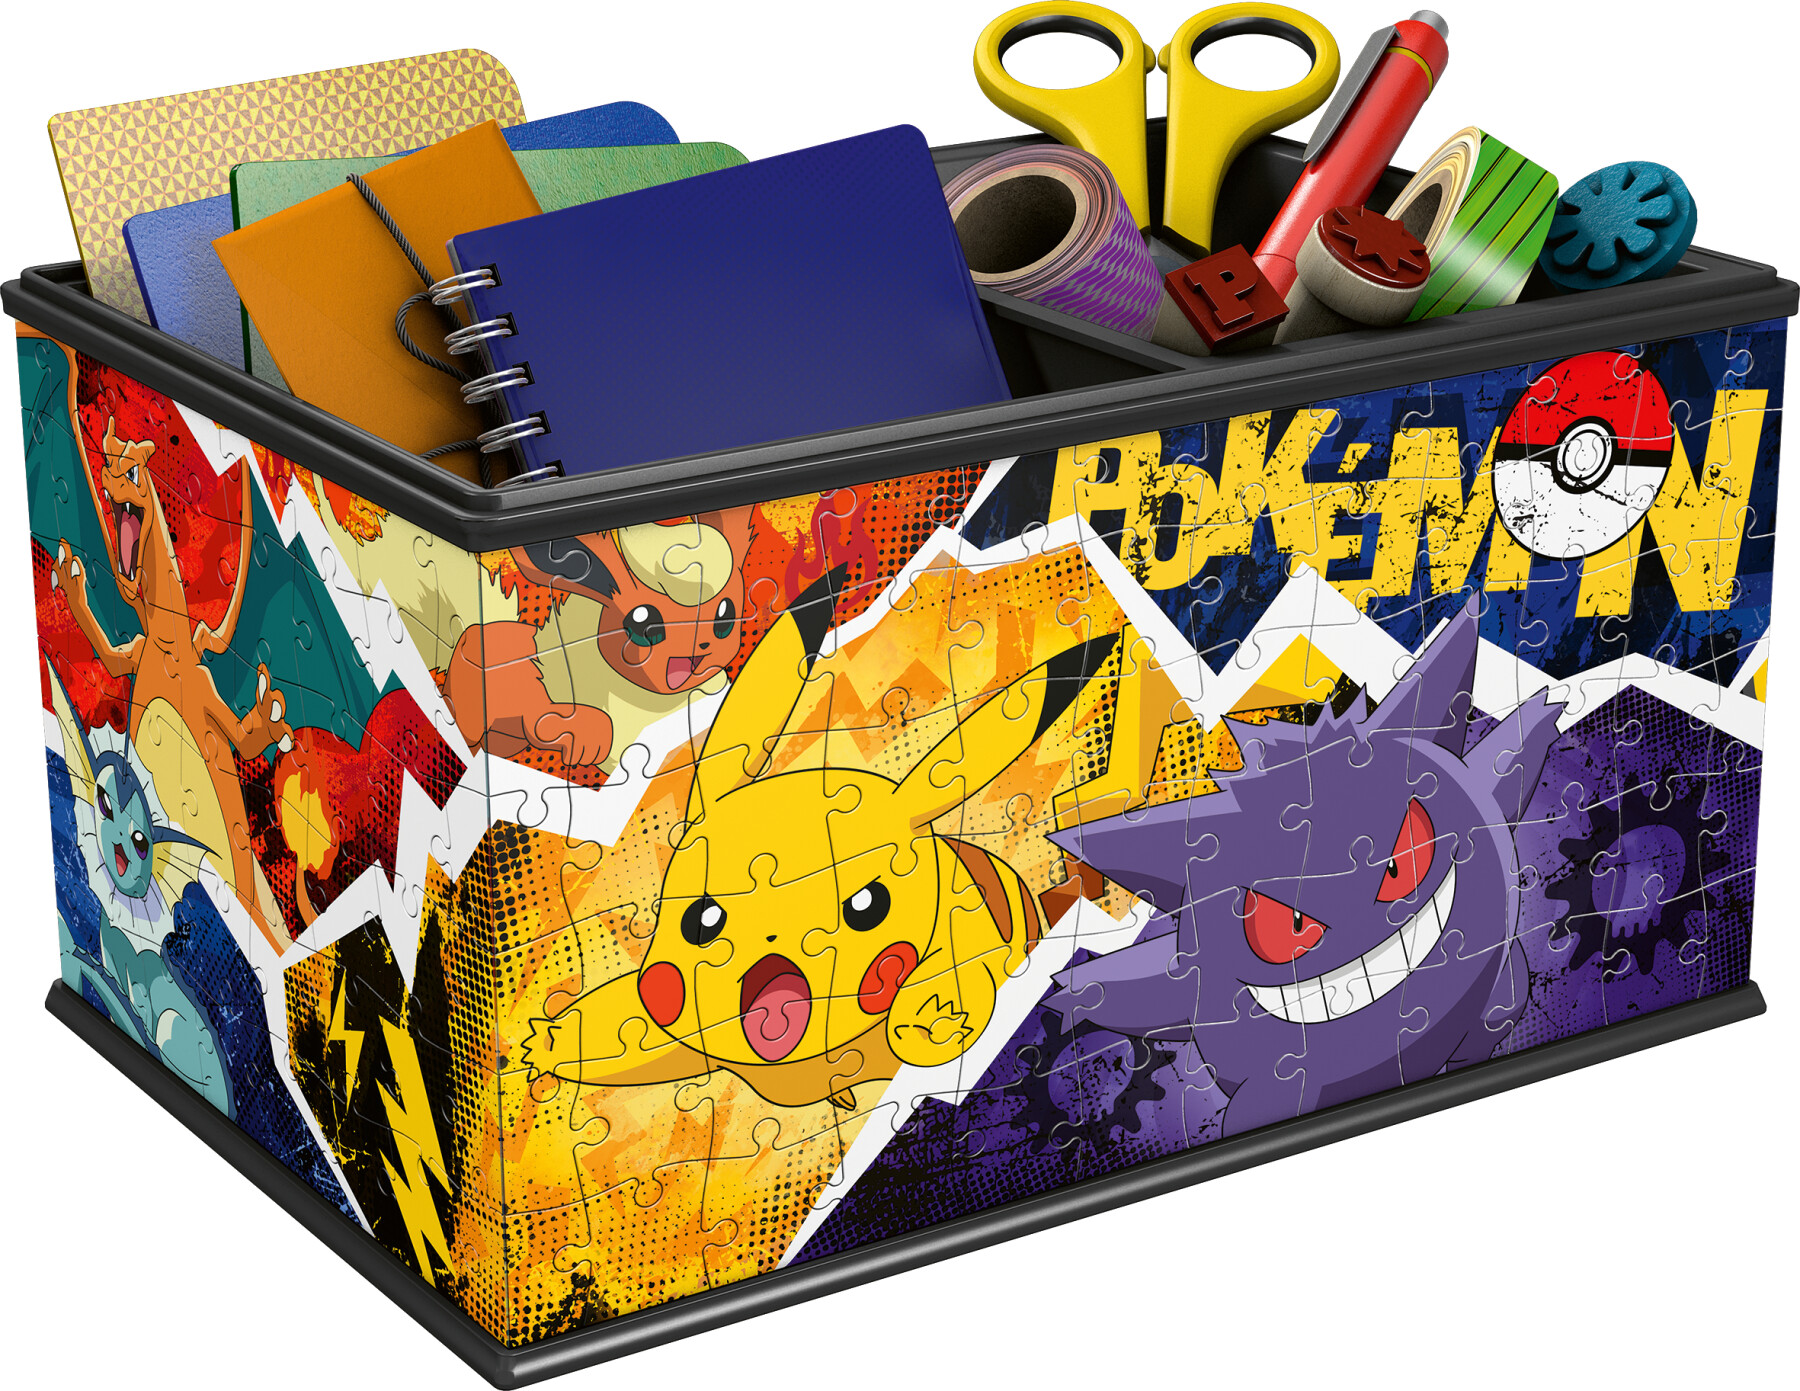 3D Puzzle Storage Box Pokémon - 216 Pezzi Ravensburger - Ravensburger